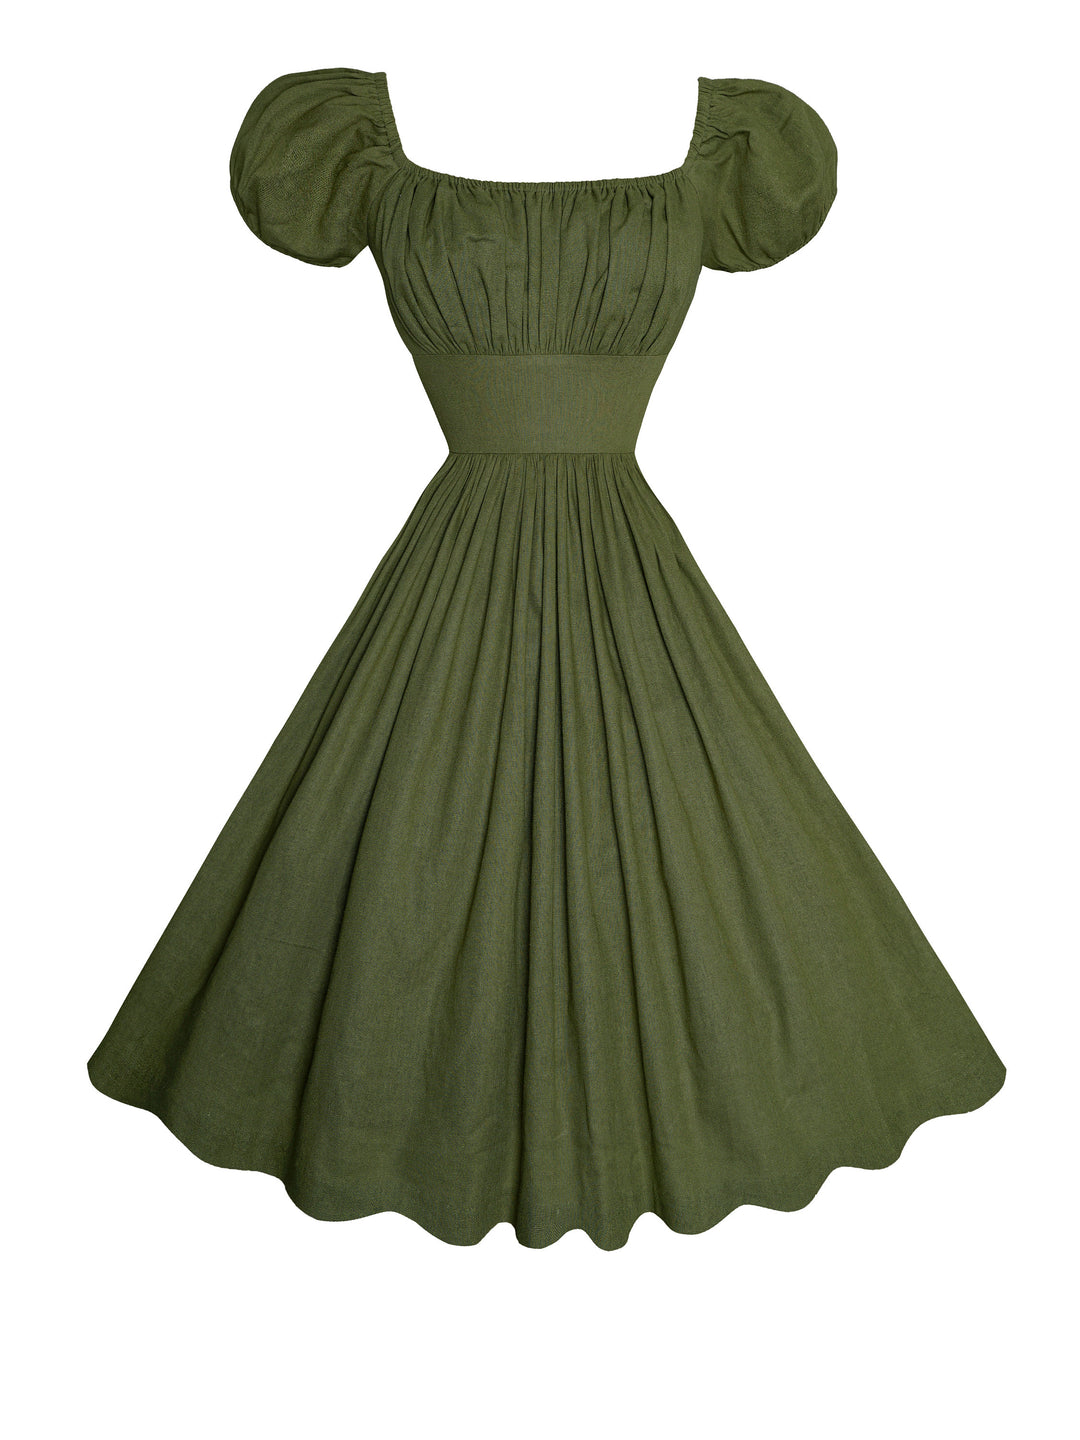 MTO - Loretta Dress in Hunters Green Linen